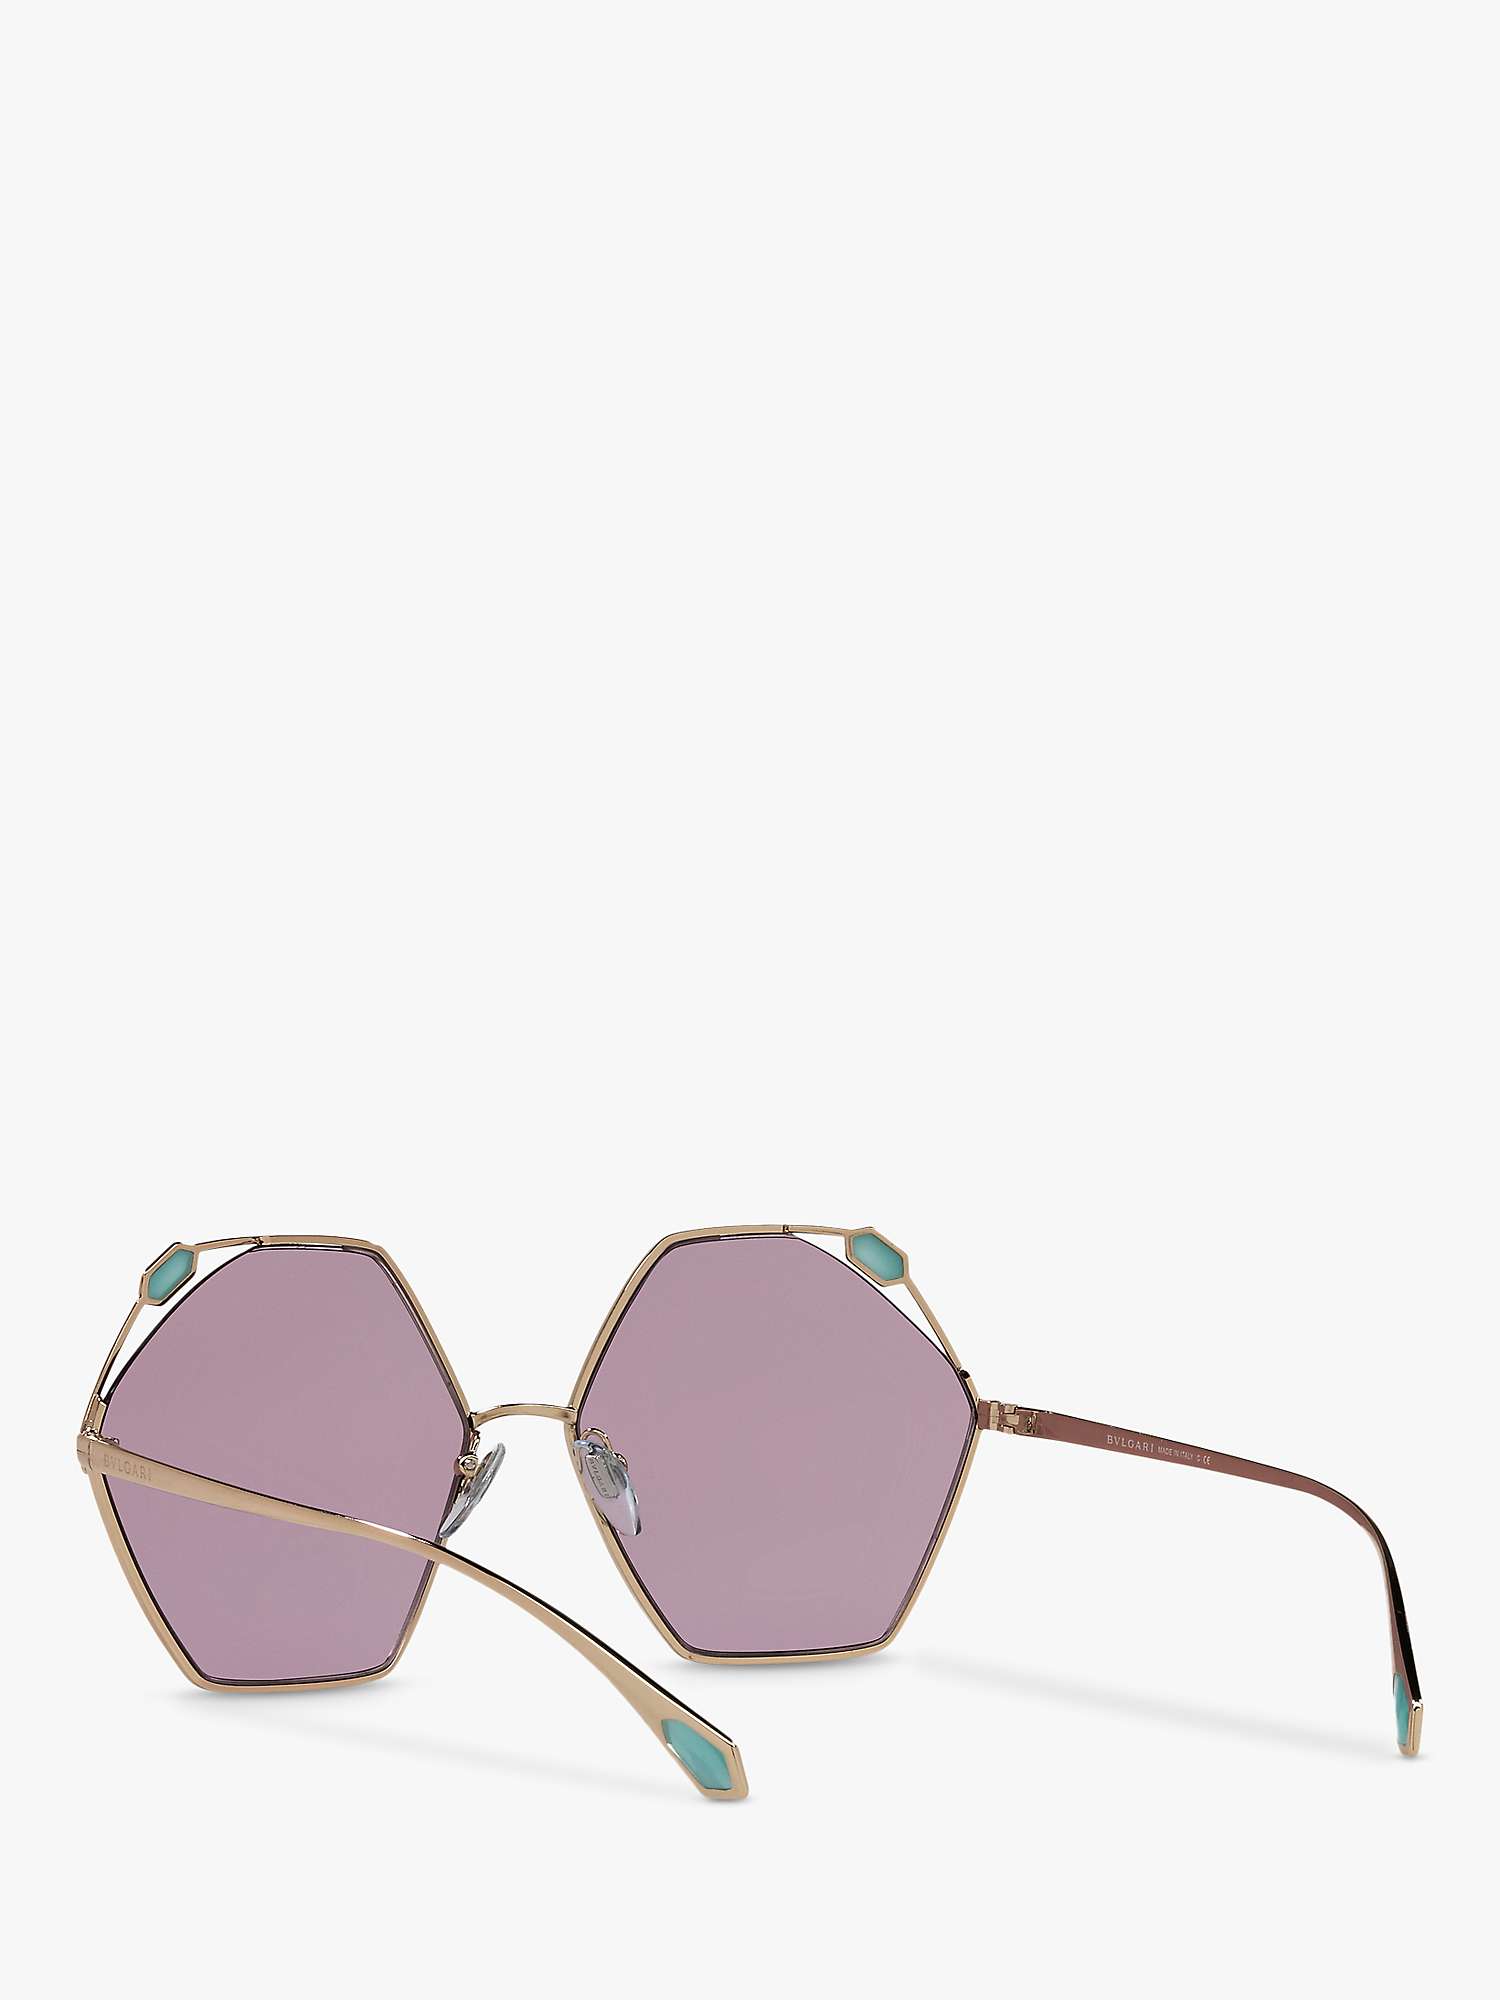 Buy BVLGARI BV6160 Women's Irregular Sunglasses, Gold/Pink Online at johnlewis.com